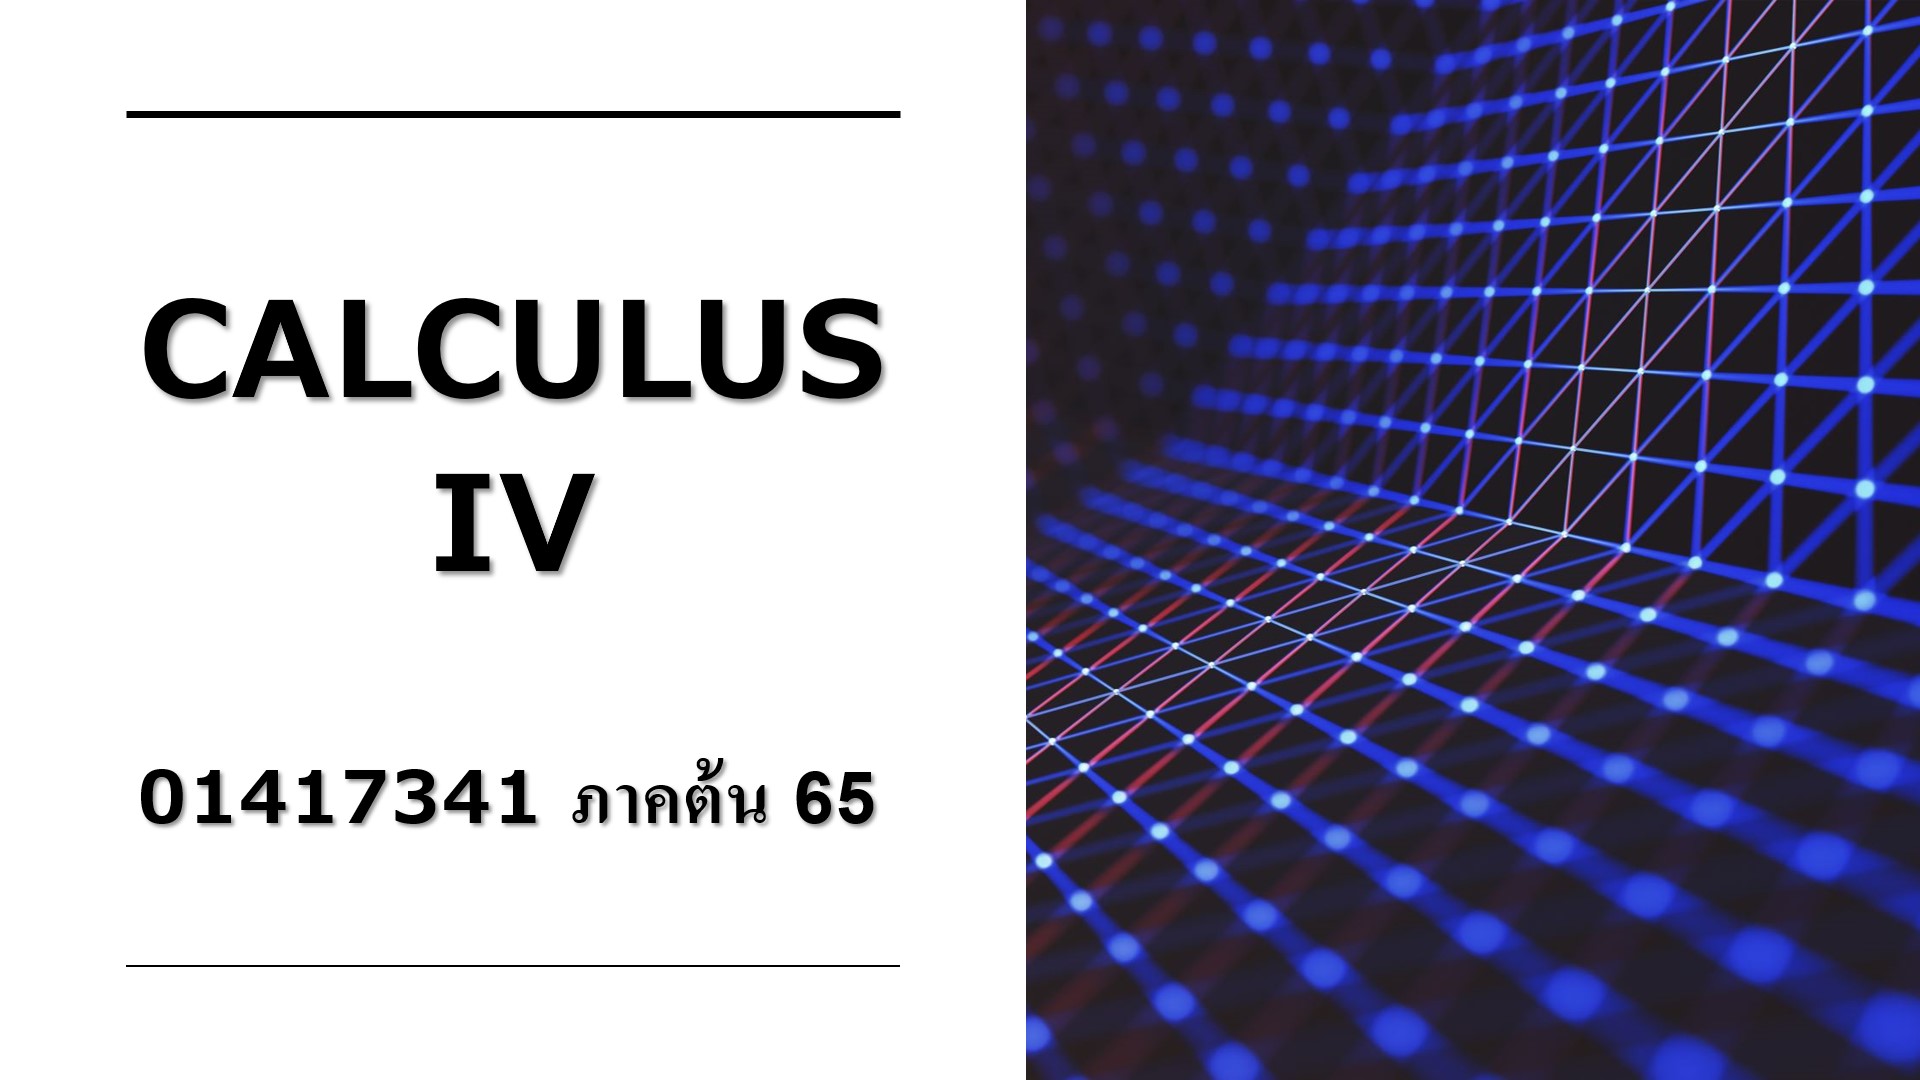 Calculus IV เทอมปลาย ปีการศึกษา 2564 01417341-65T1